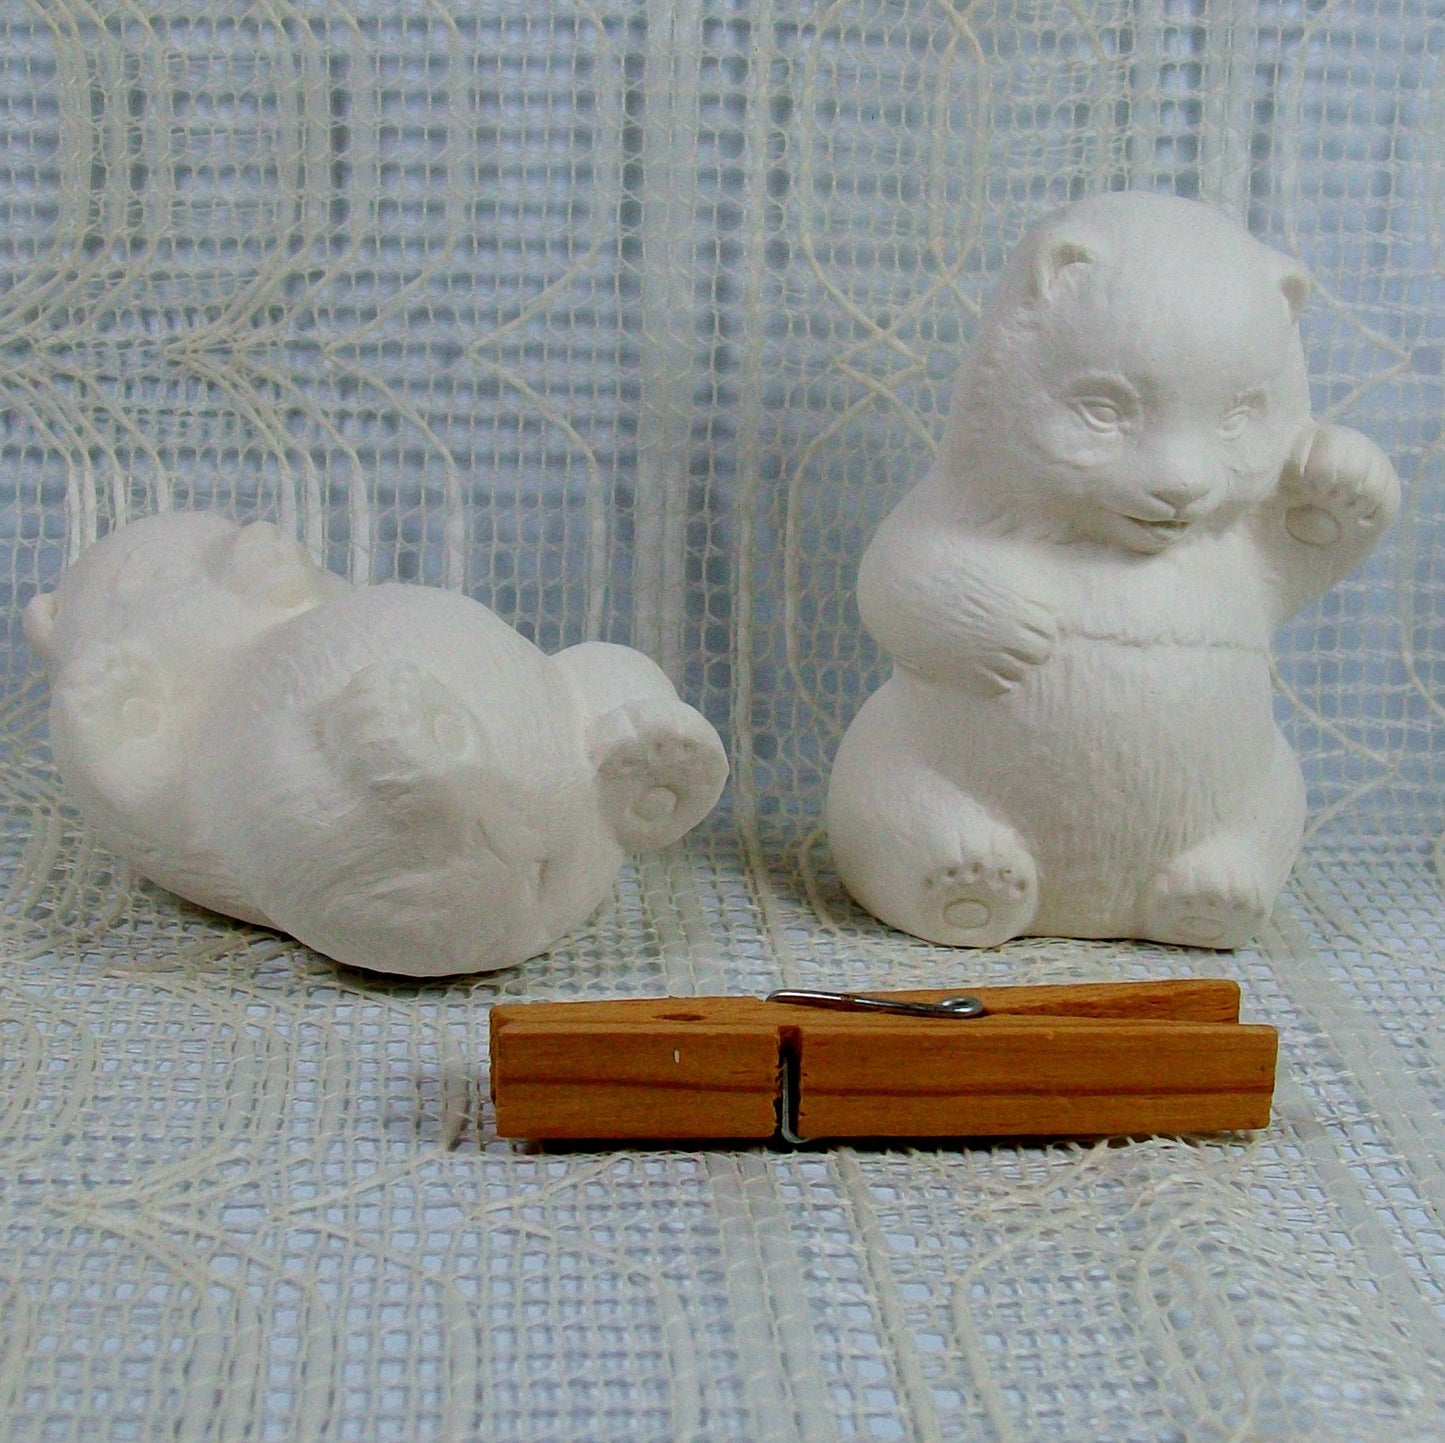 Ready to Paint Panda Figurines / Ceramics to Paint / Unpainted Ceramic Panda Statue / Bisque Ware / Paintable Ceramics